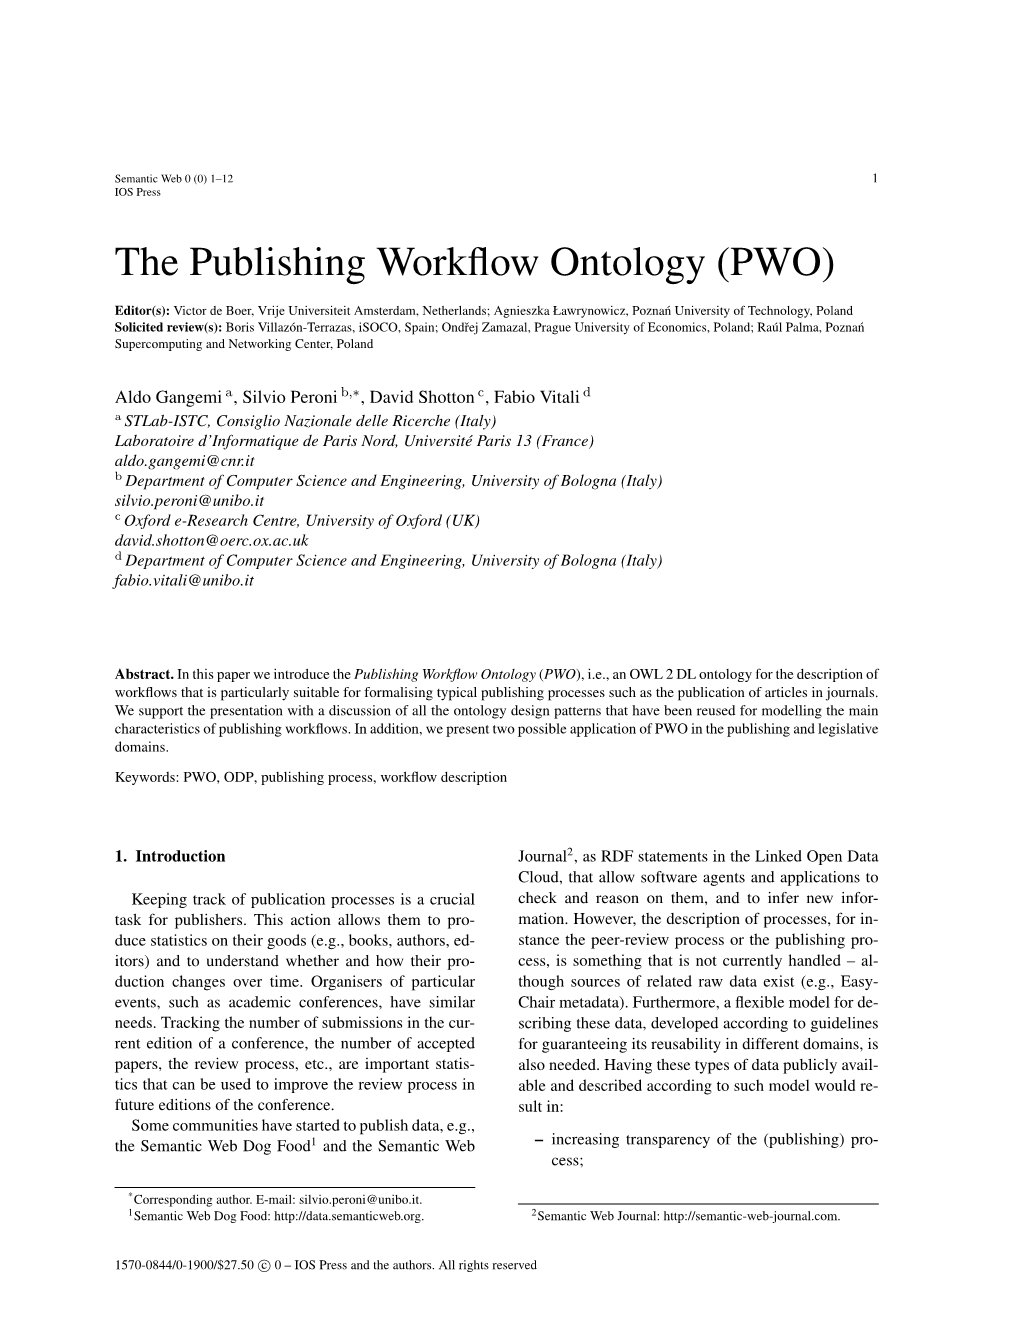 The Publishing Workflow Ontology (PWO)